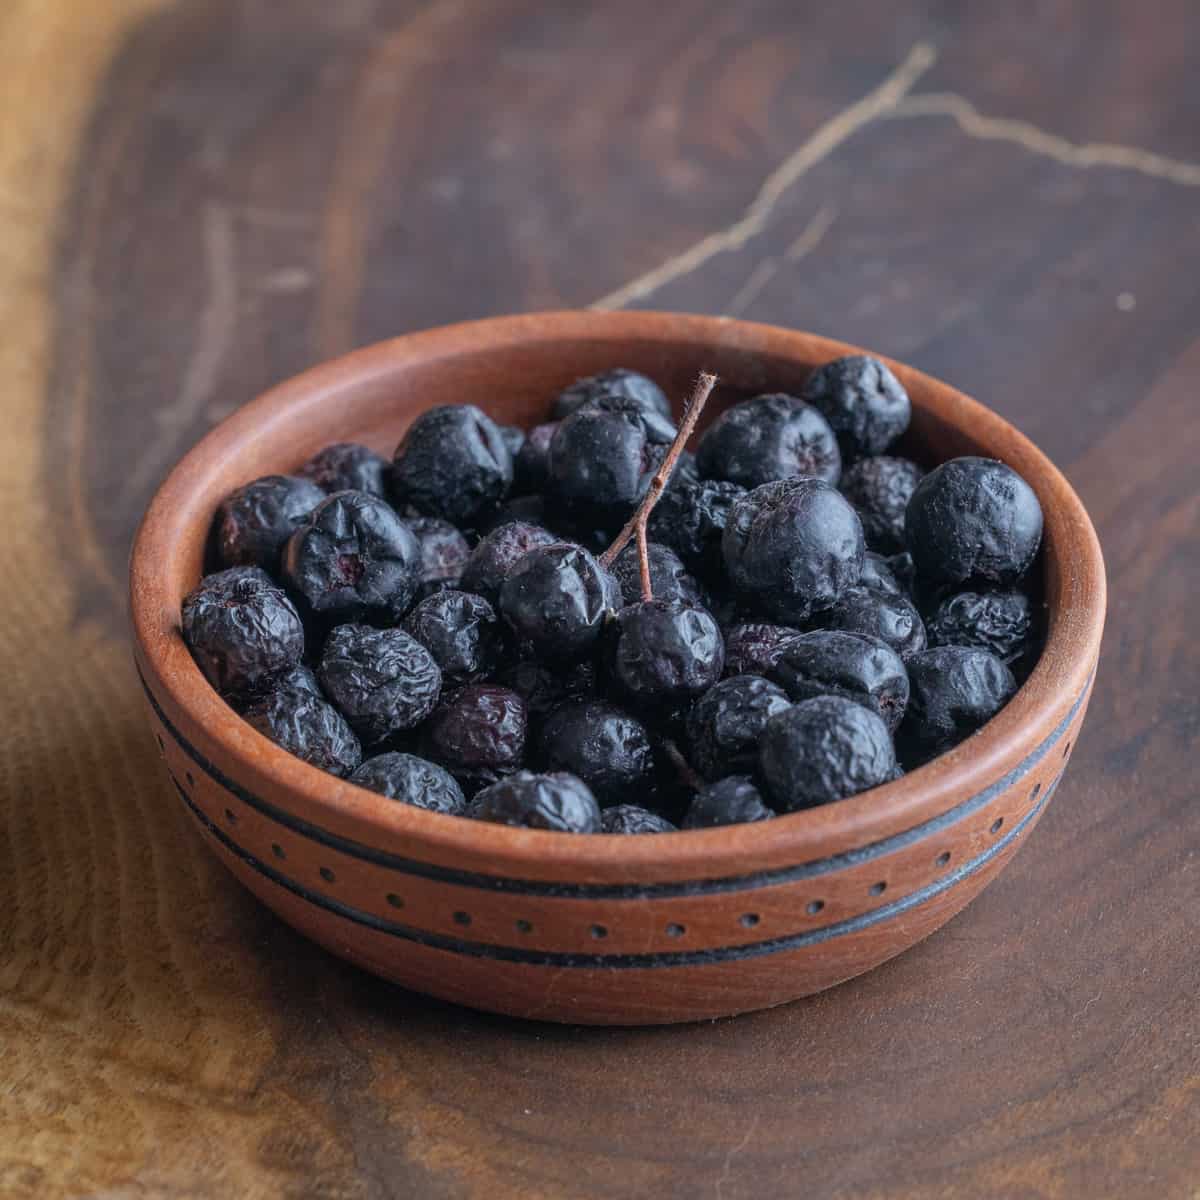 a bowl of aronia berries or chokeberries. 